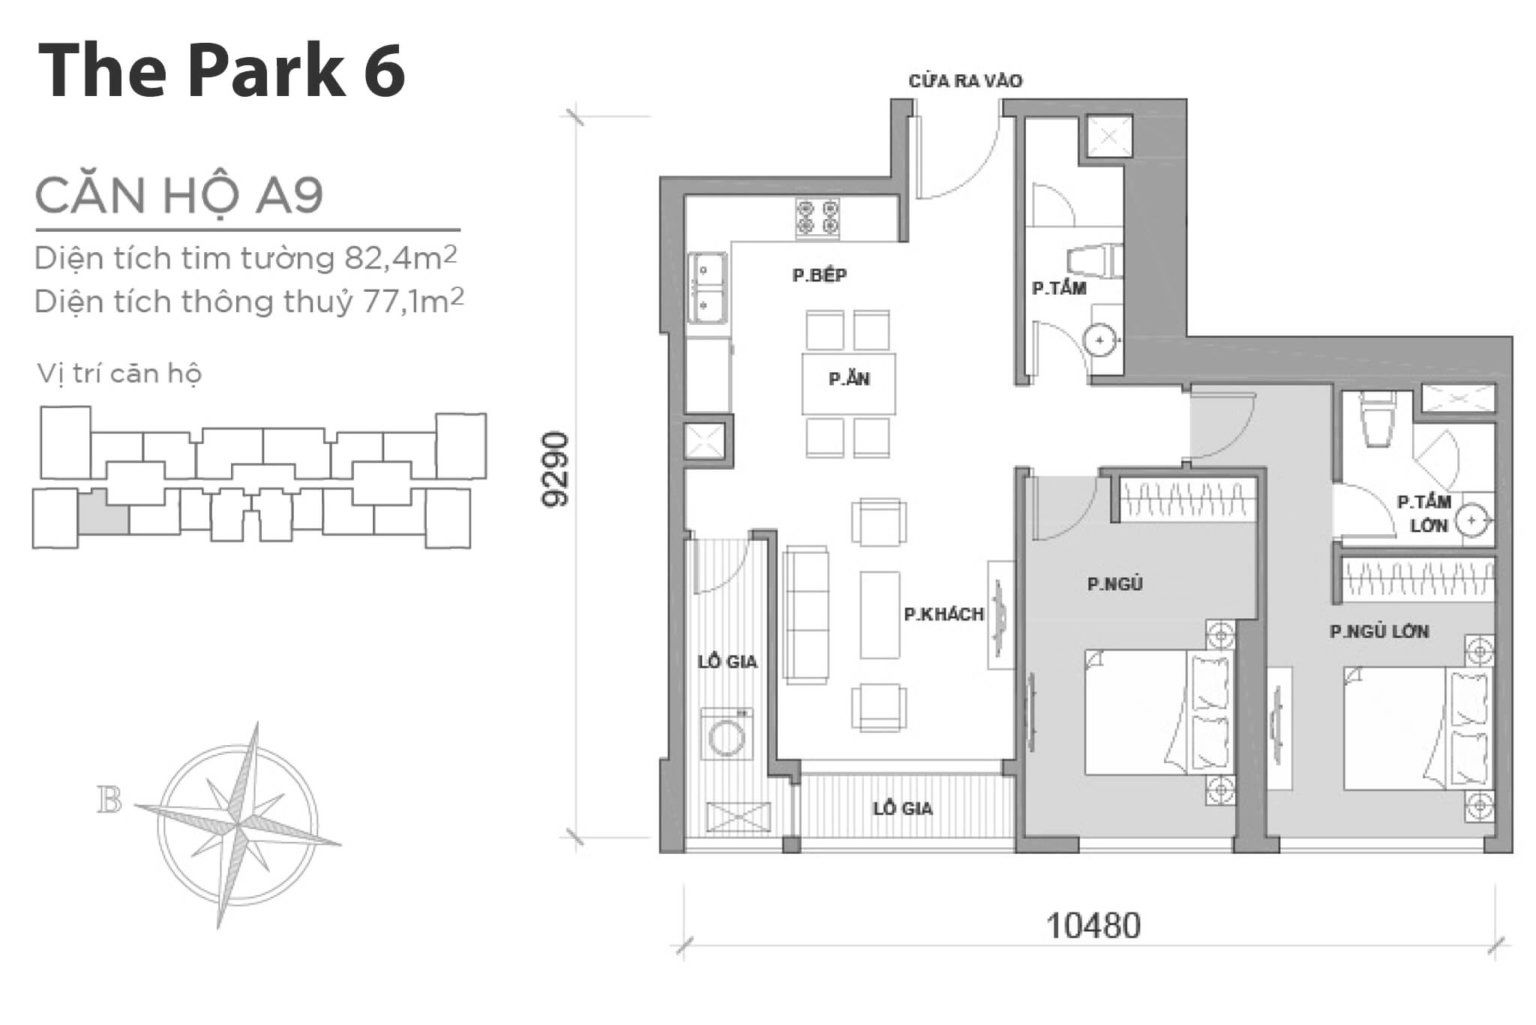 Layout căn hộ P6-A9 tầng 2-22 & 24-50